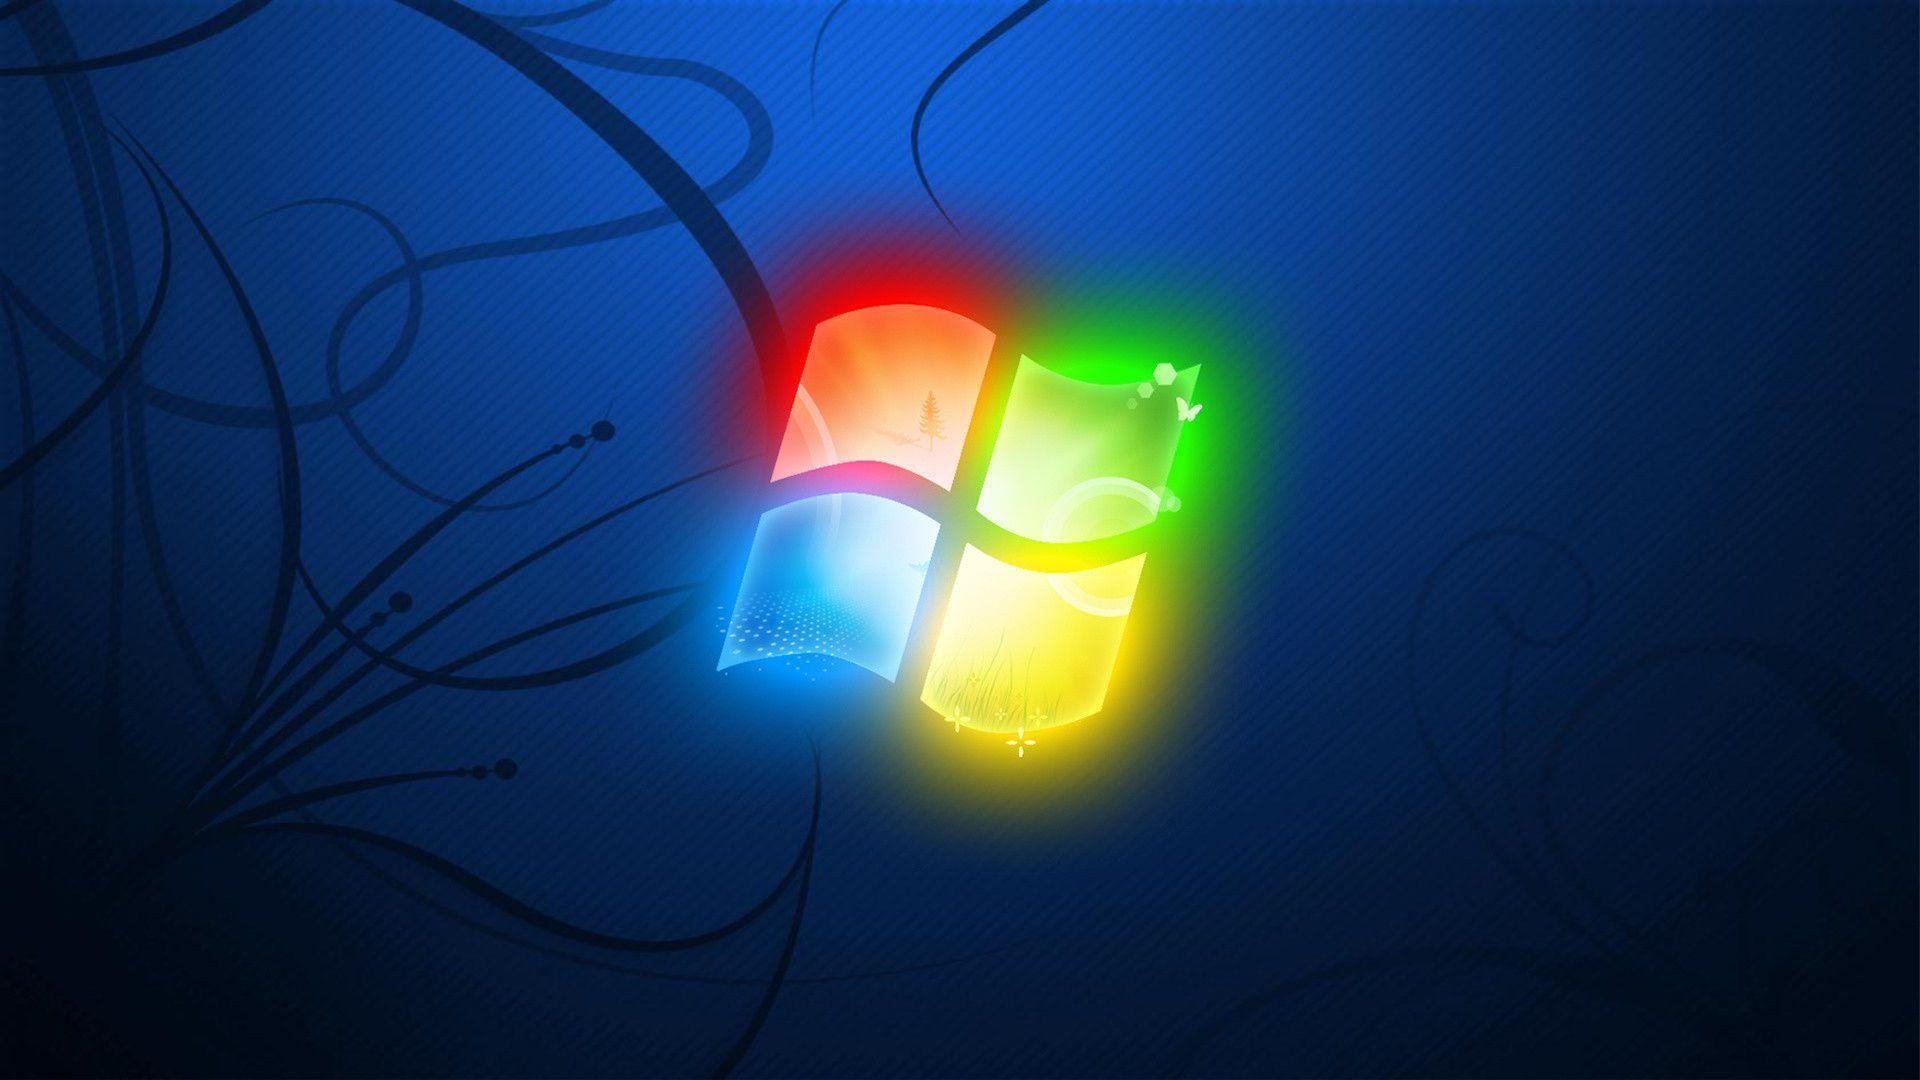 Windows 7 Wallpapers Hd 1080P 132317